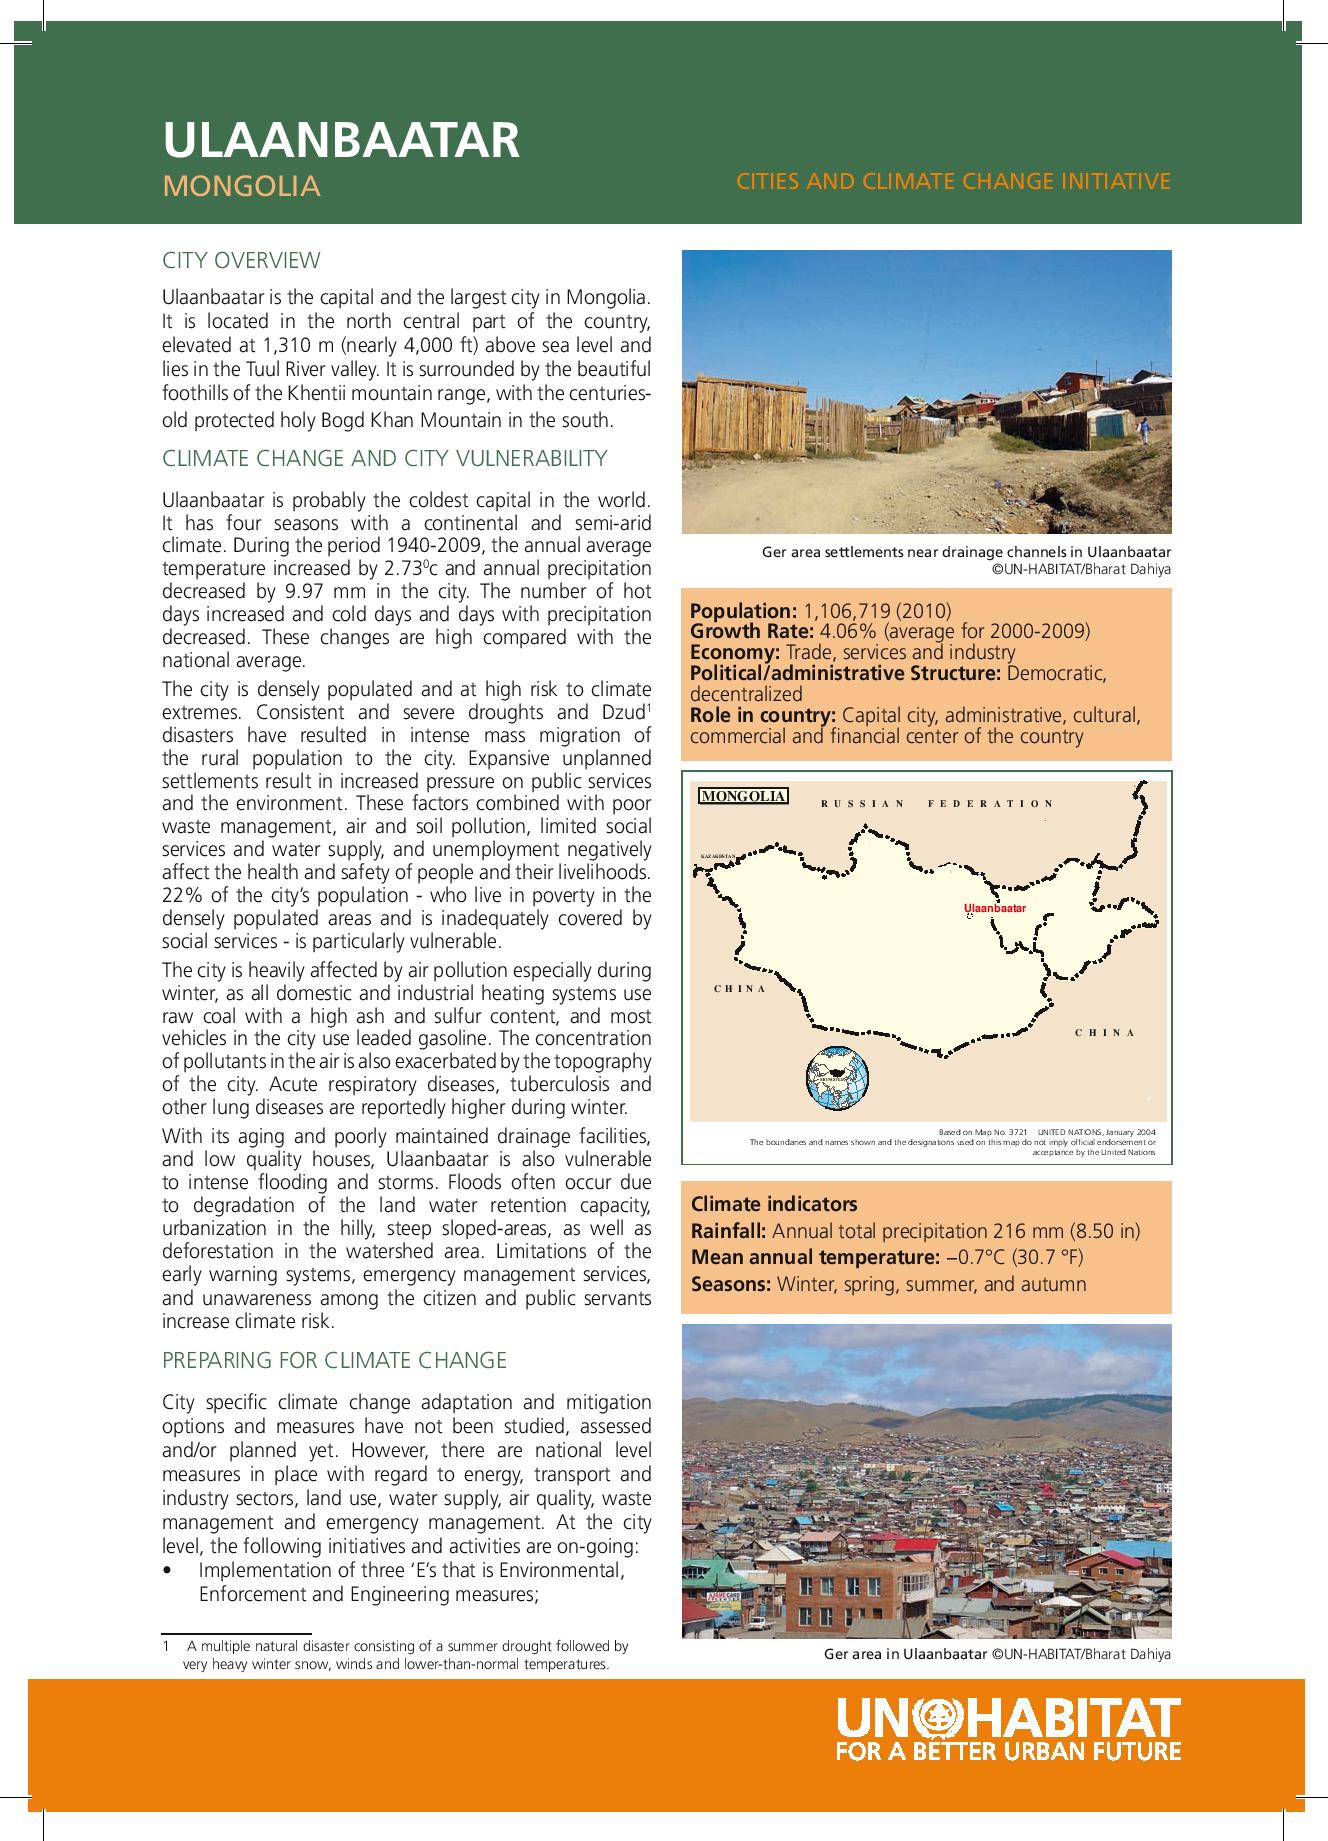 Ulaanbaatar, Mongolia: CCCI Overview (May 2010)